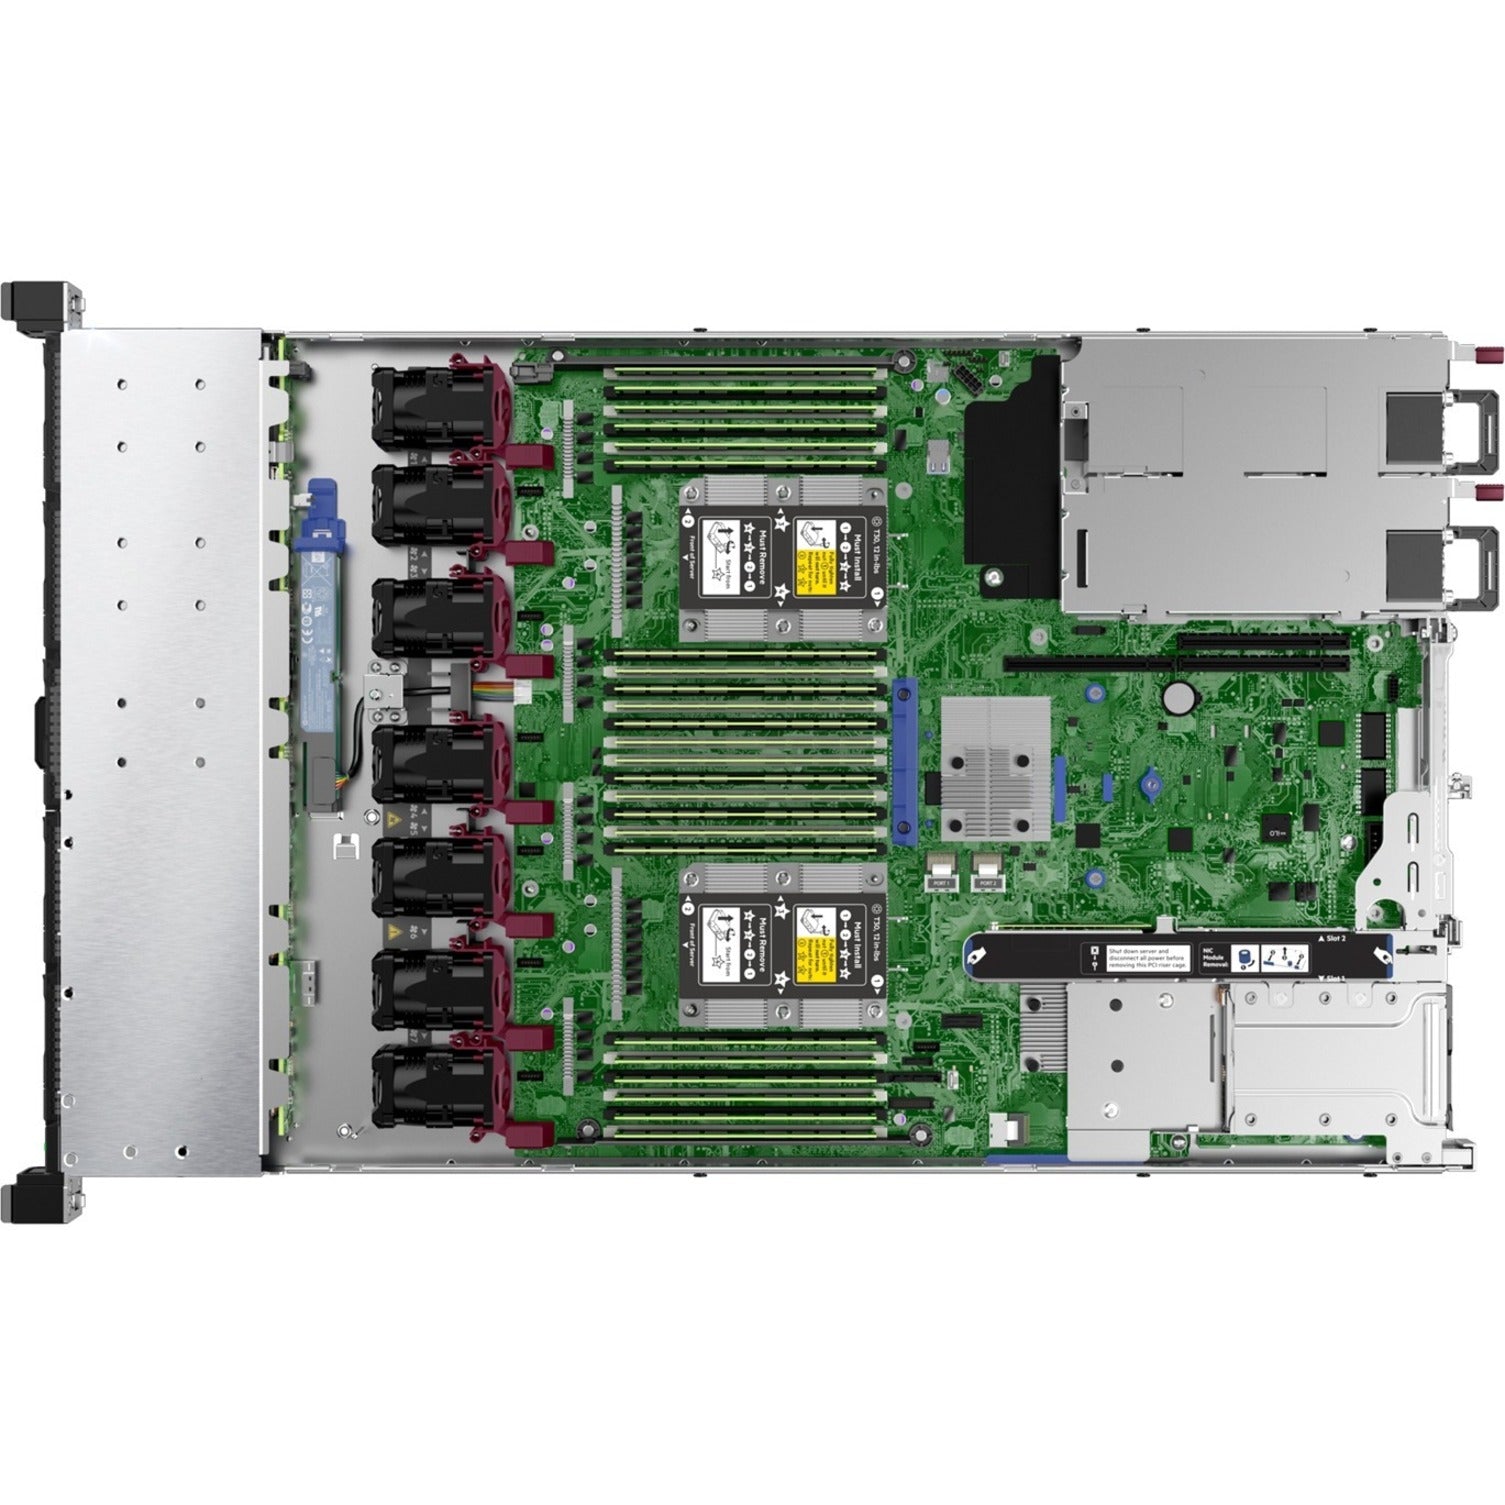 HPE E ProLiant DL360 G10 1U Rack Server - 1 x Intel Xeon Gold 6226R 2.90 GHz - 32 GB RAM - Serial ATA, 12Gb/s SAS Controller (P56953-B21)